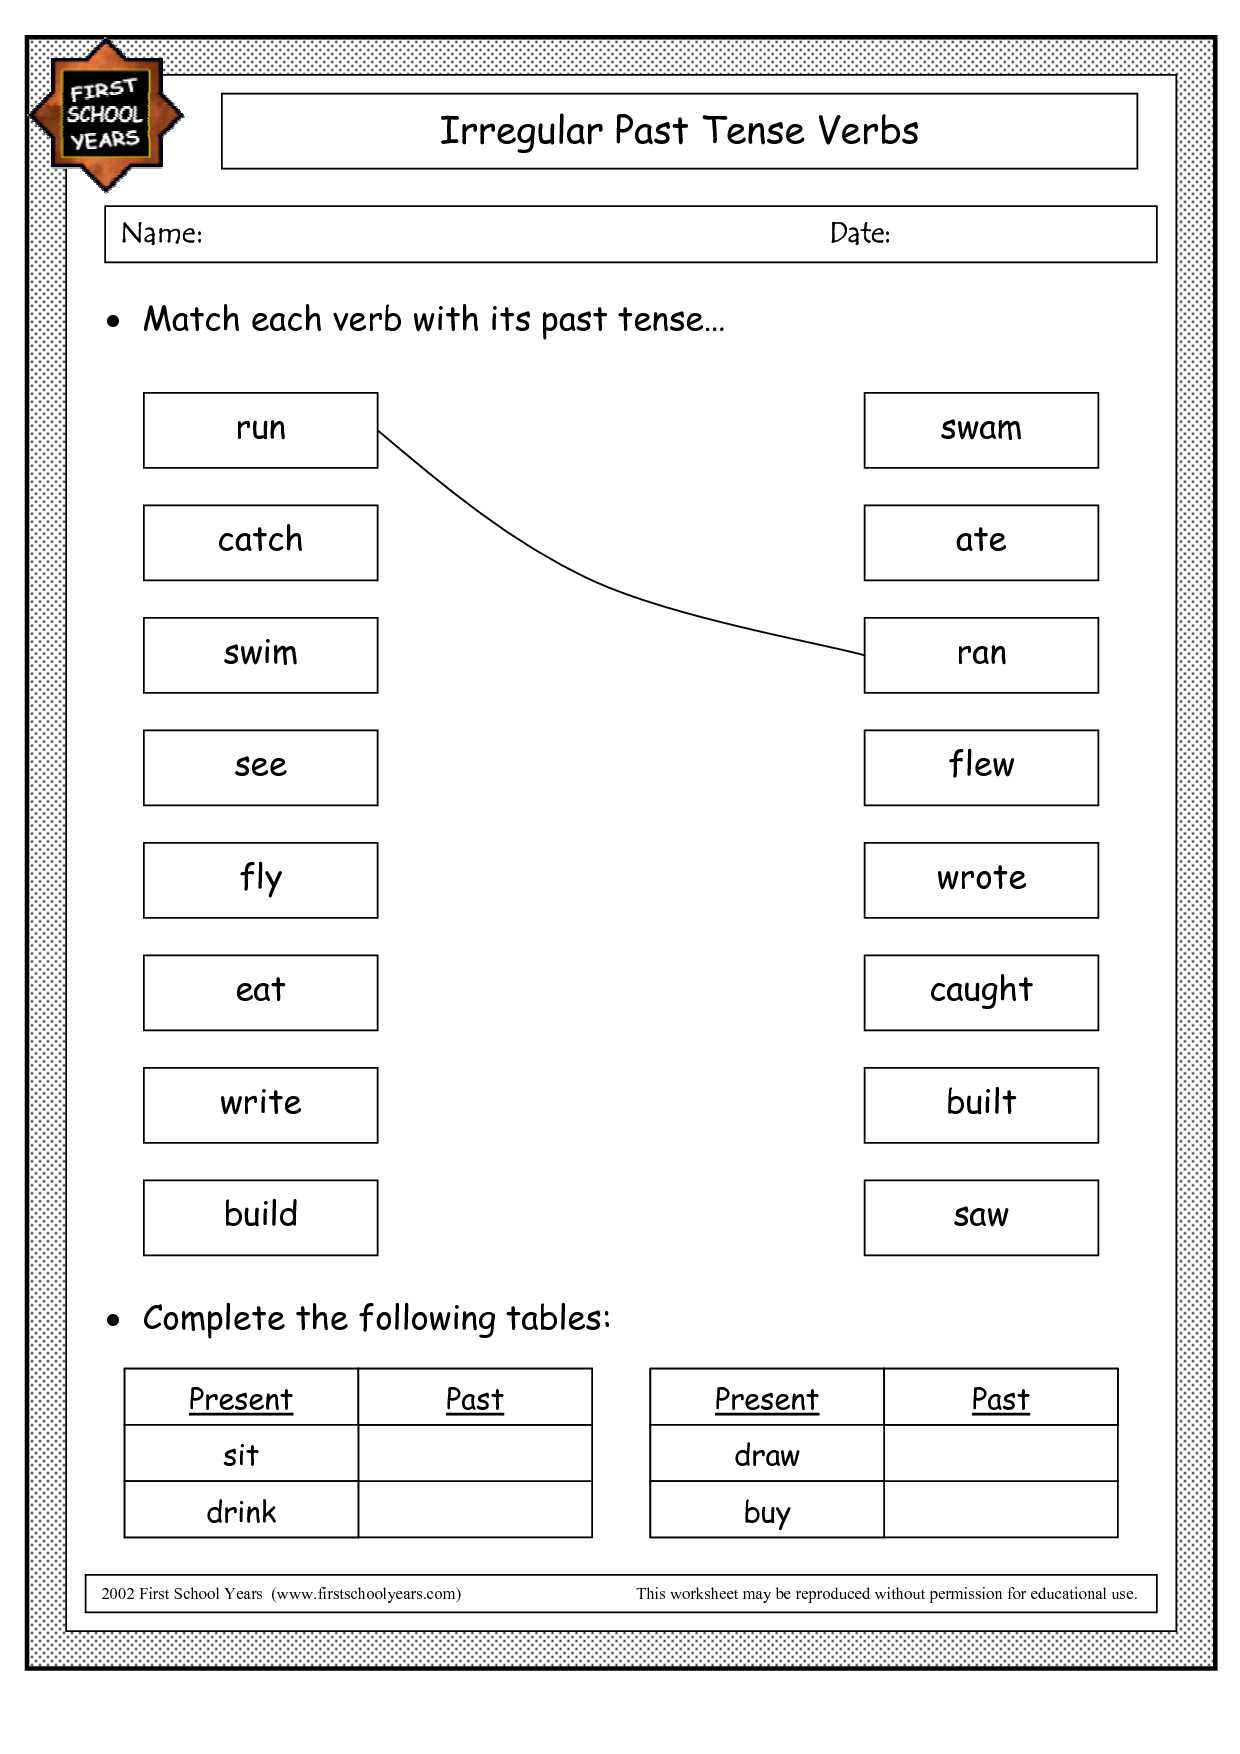 Regular Irregular Verbs Worksheet with Irregular Verbs Worksheets for 1st Grade